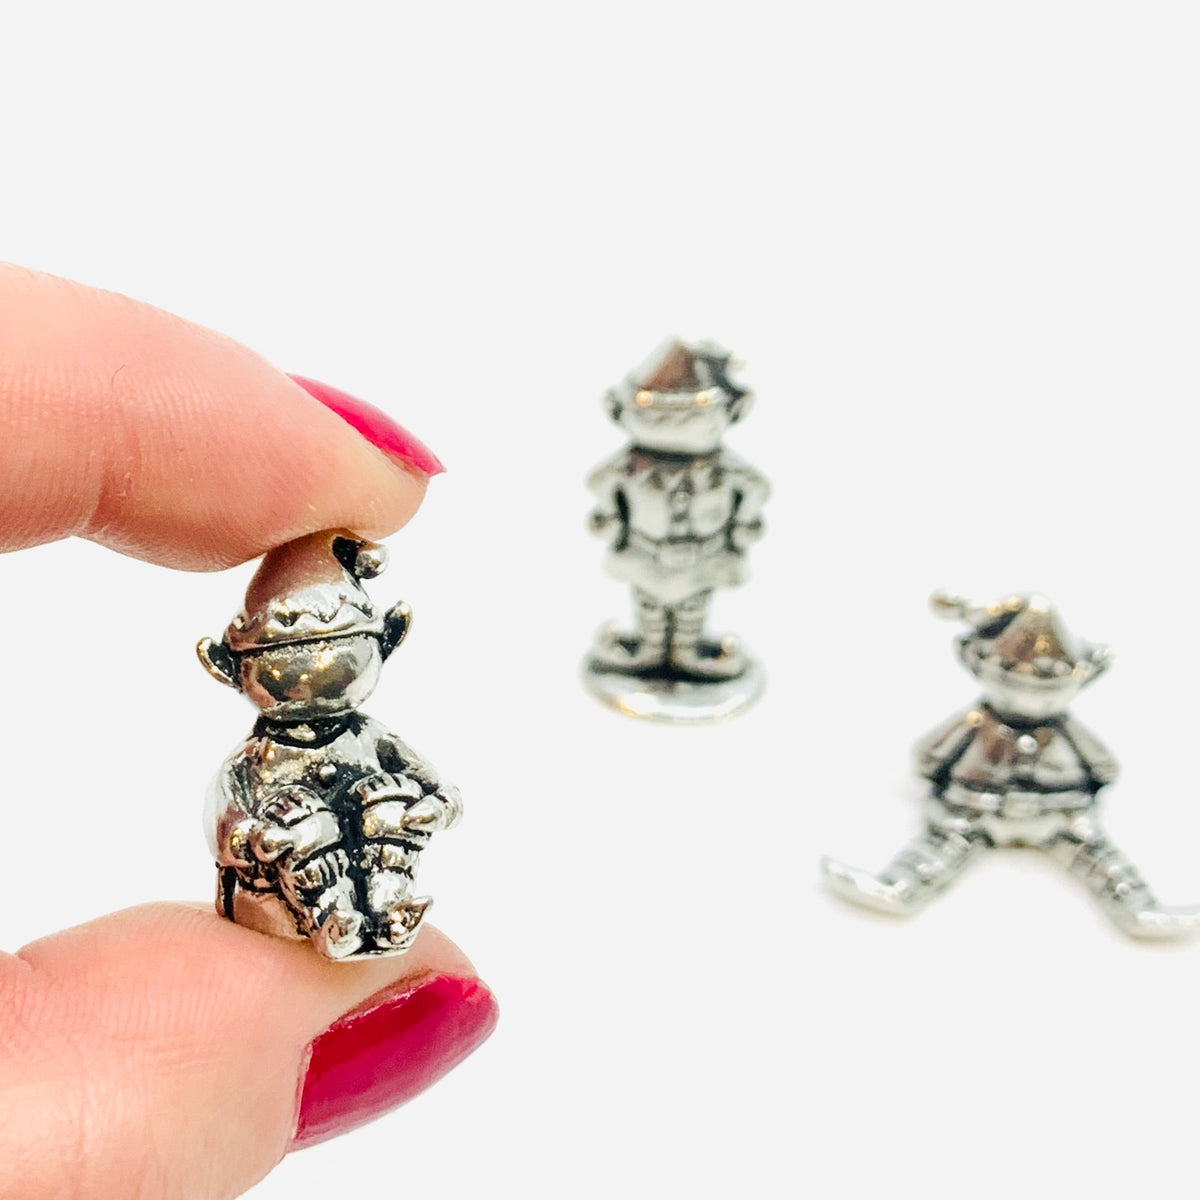 Miniature 3pc. Pewter Pocket Elves Set